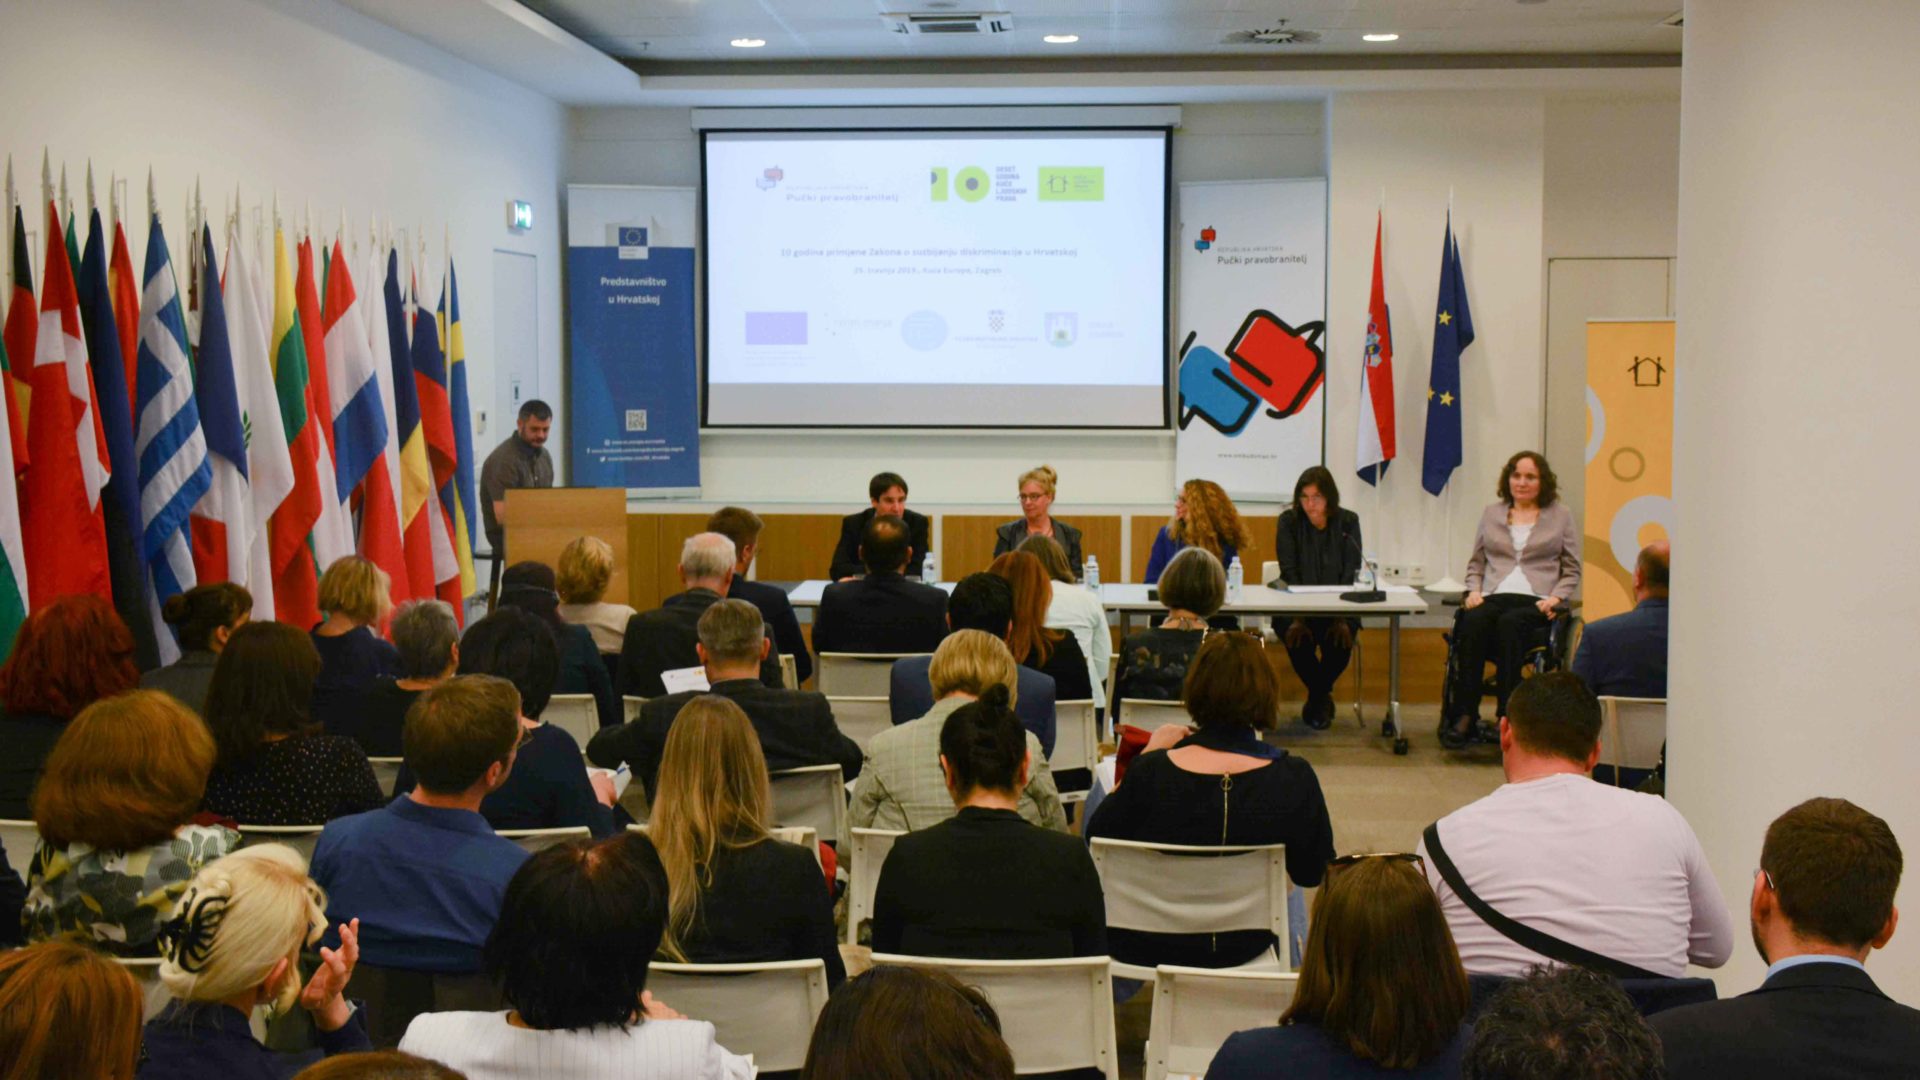 Marking 10 Years of the Anti-Discrimination Act in Croatia